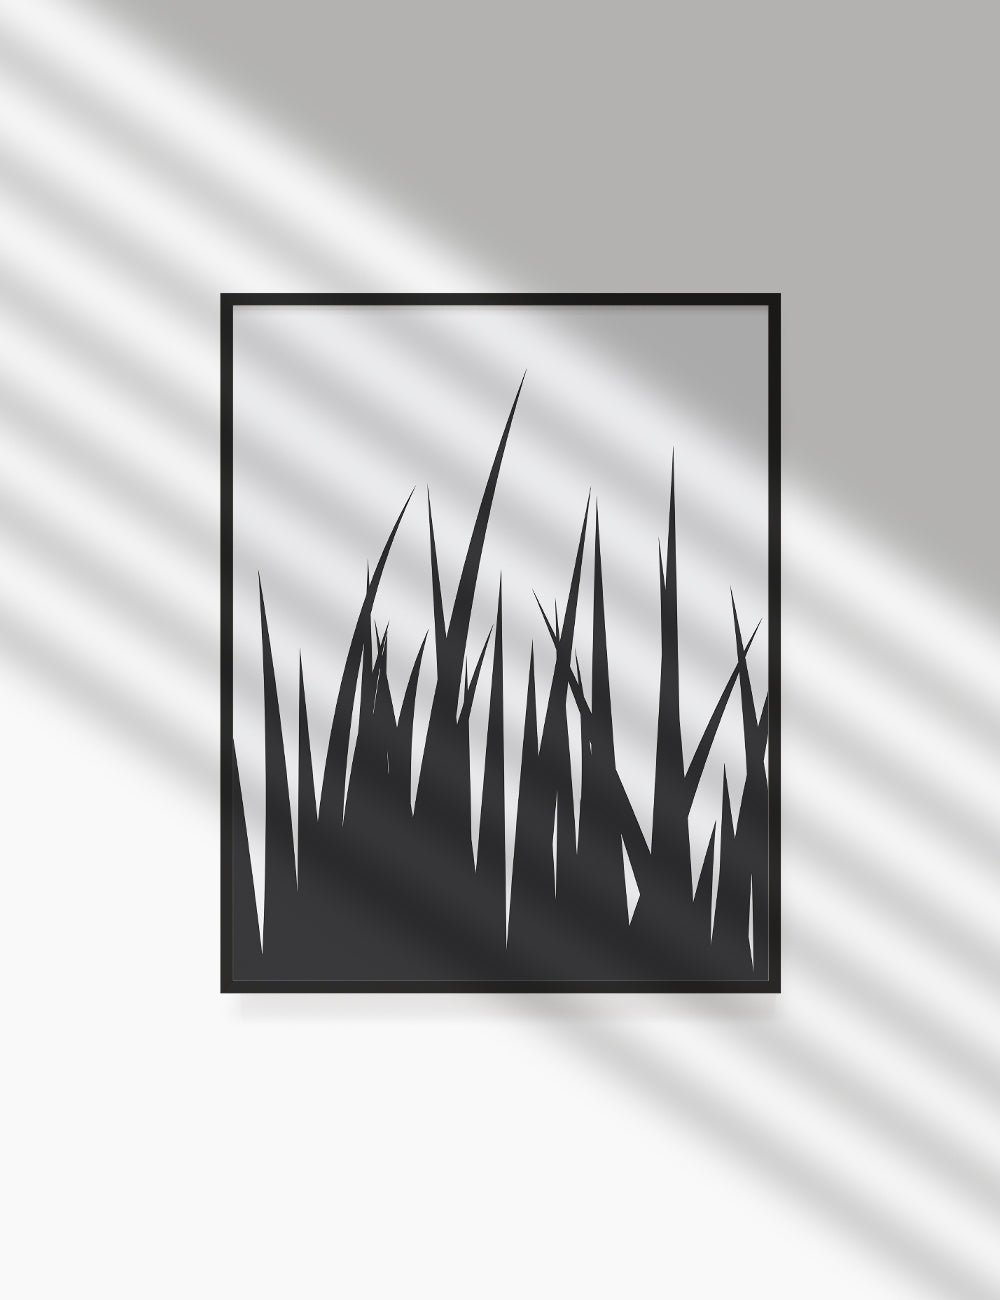 GRASS. MINIMALIST BOTANICAL BOHO ART. BLACK AND WHITE. Minimal Aesthetic. Clean Design. Printable Wall Art Illustration. - PAPER MOON Art & Design